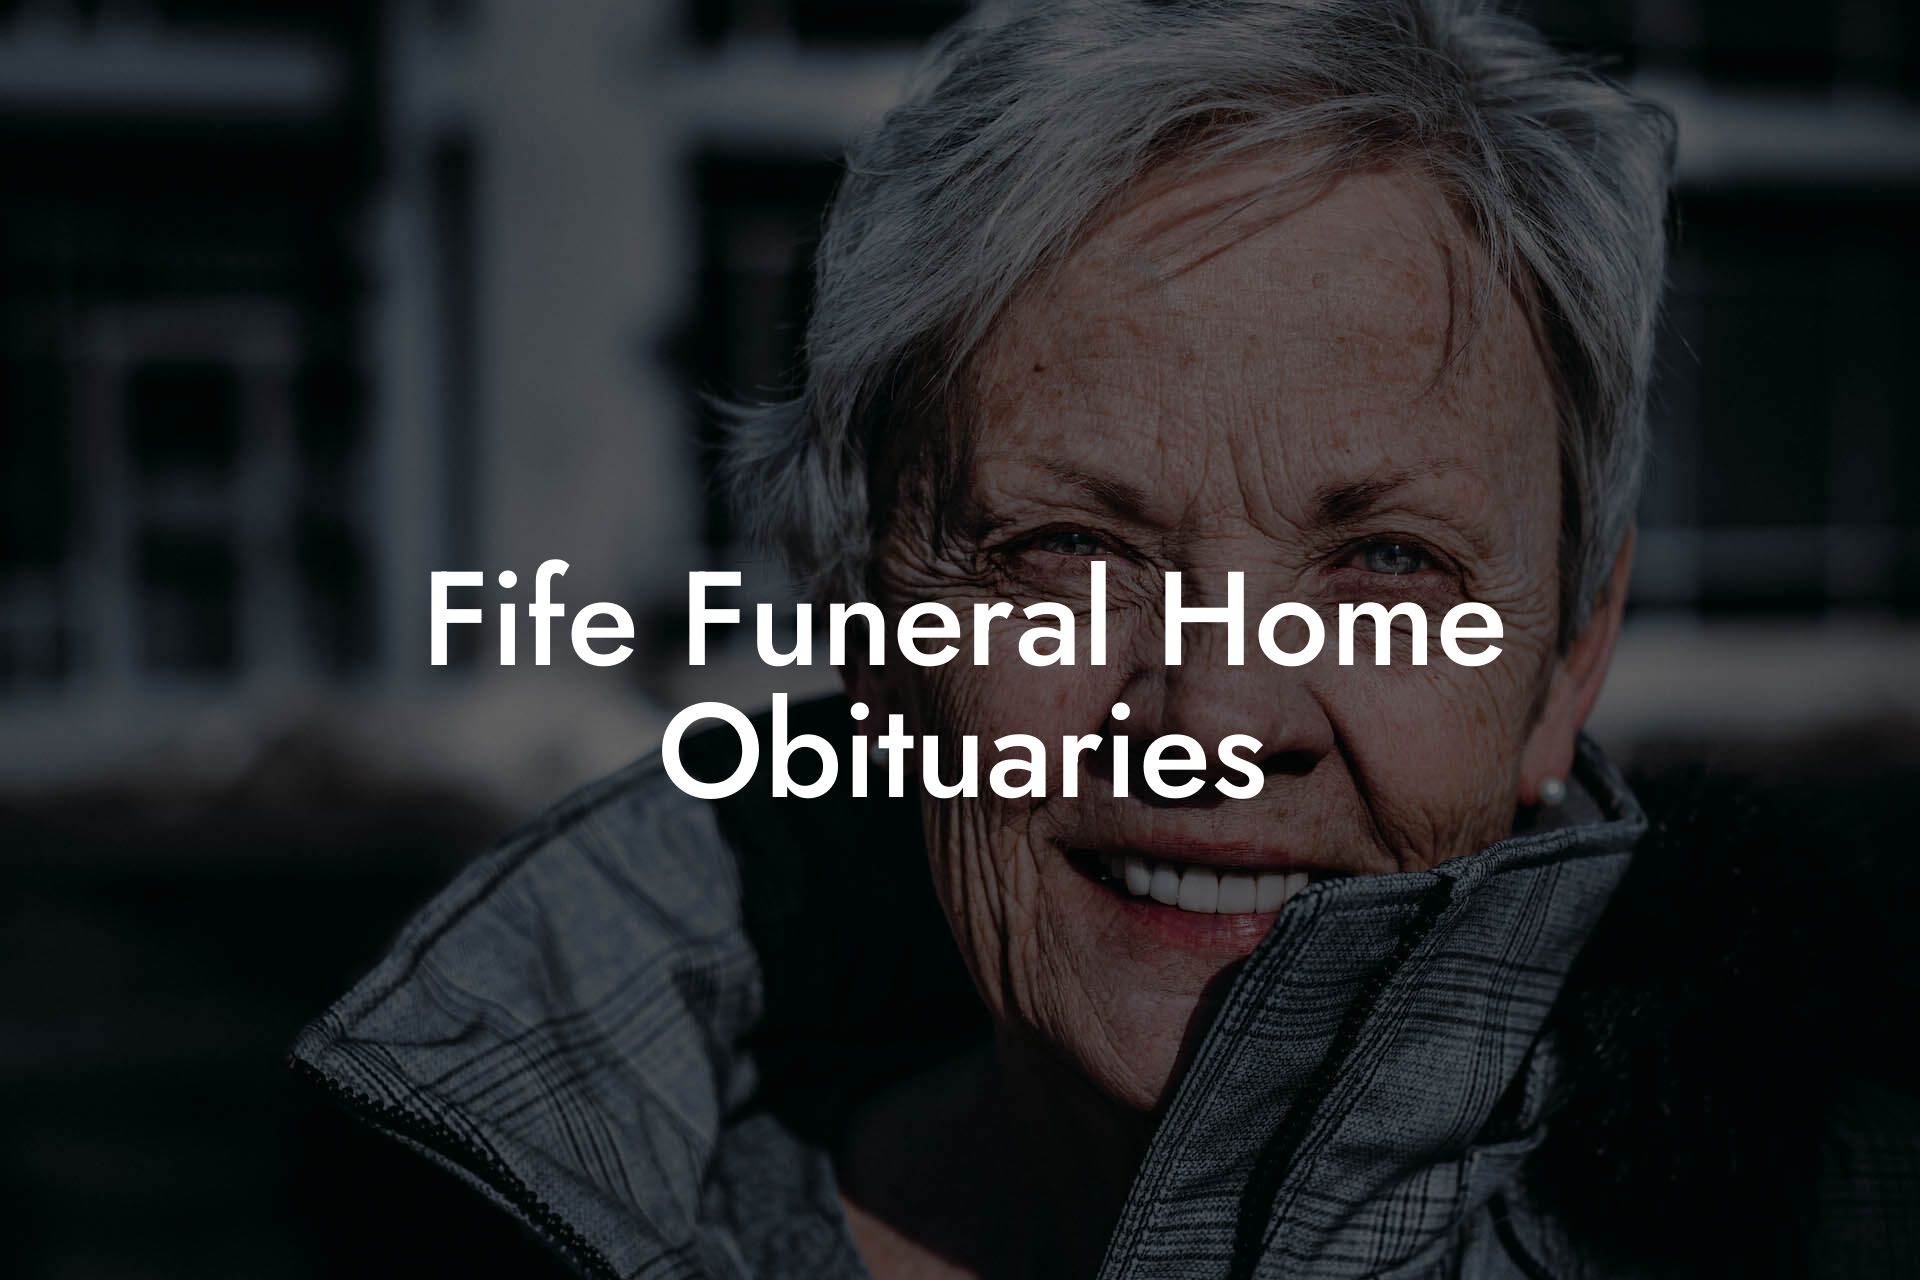 Fife Funeral Home Obituaries